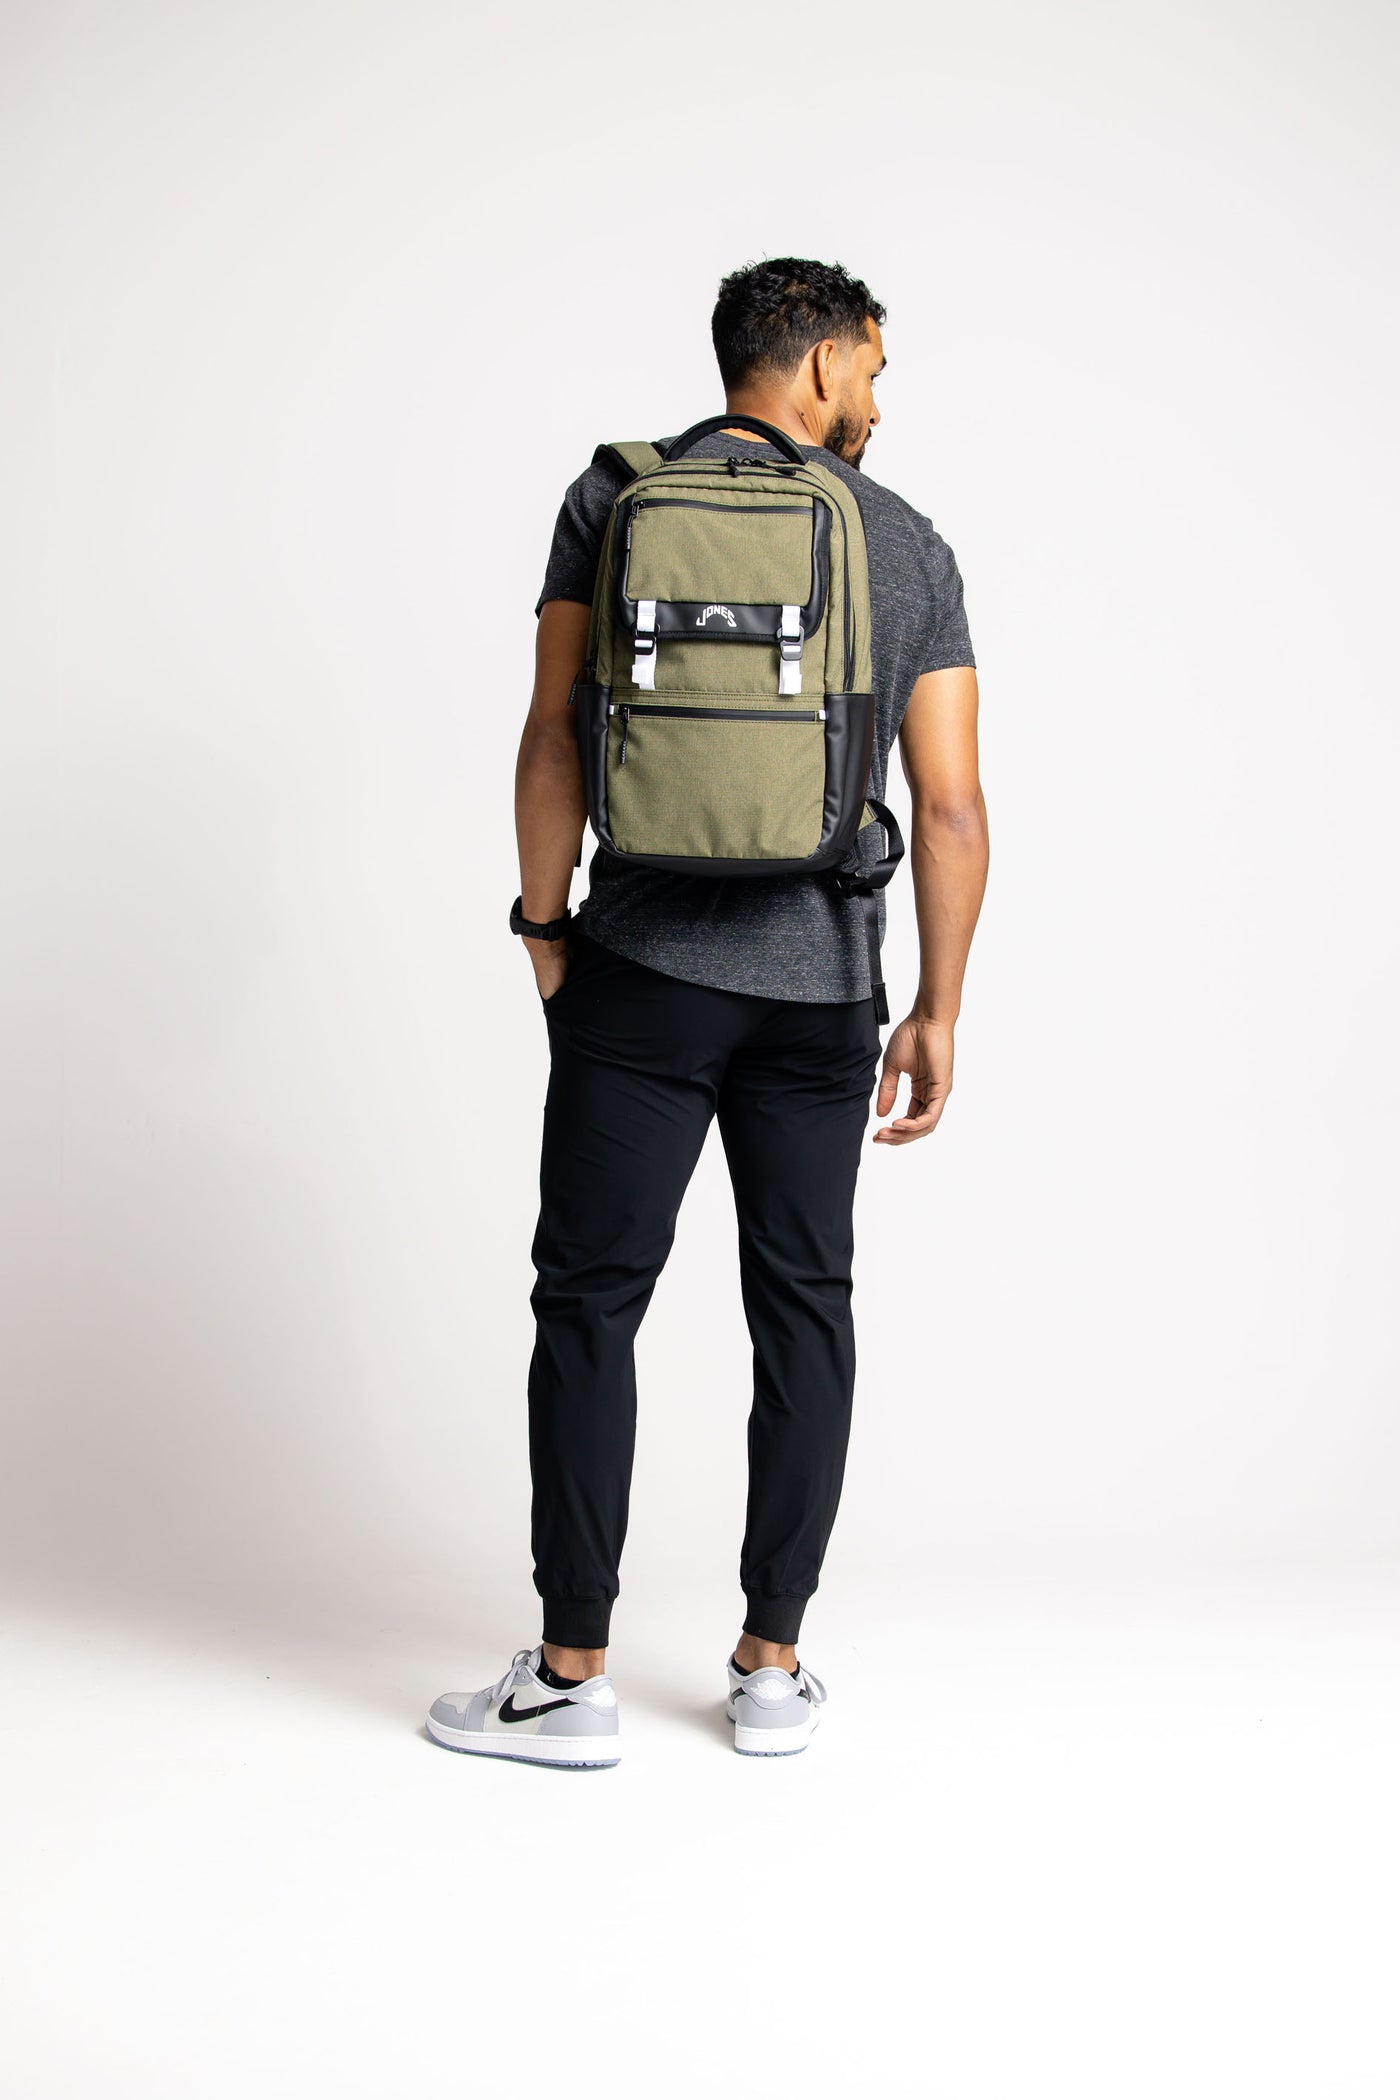 A2 Backpack - Olive